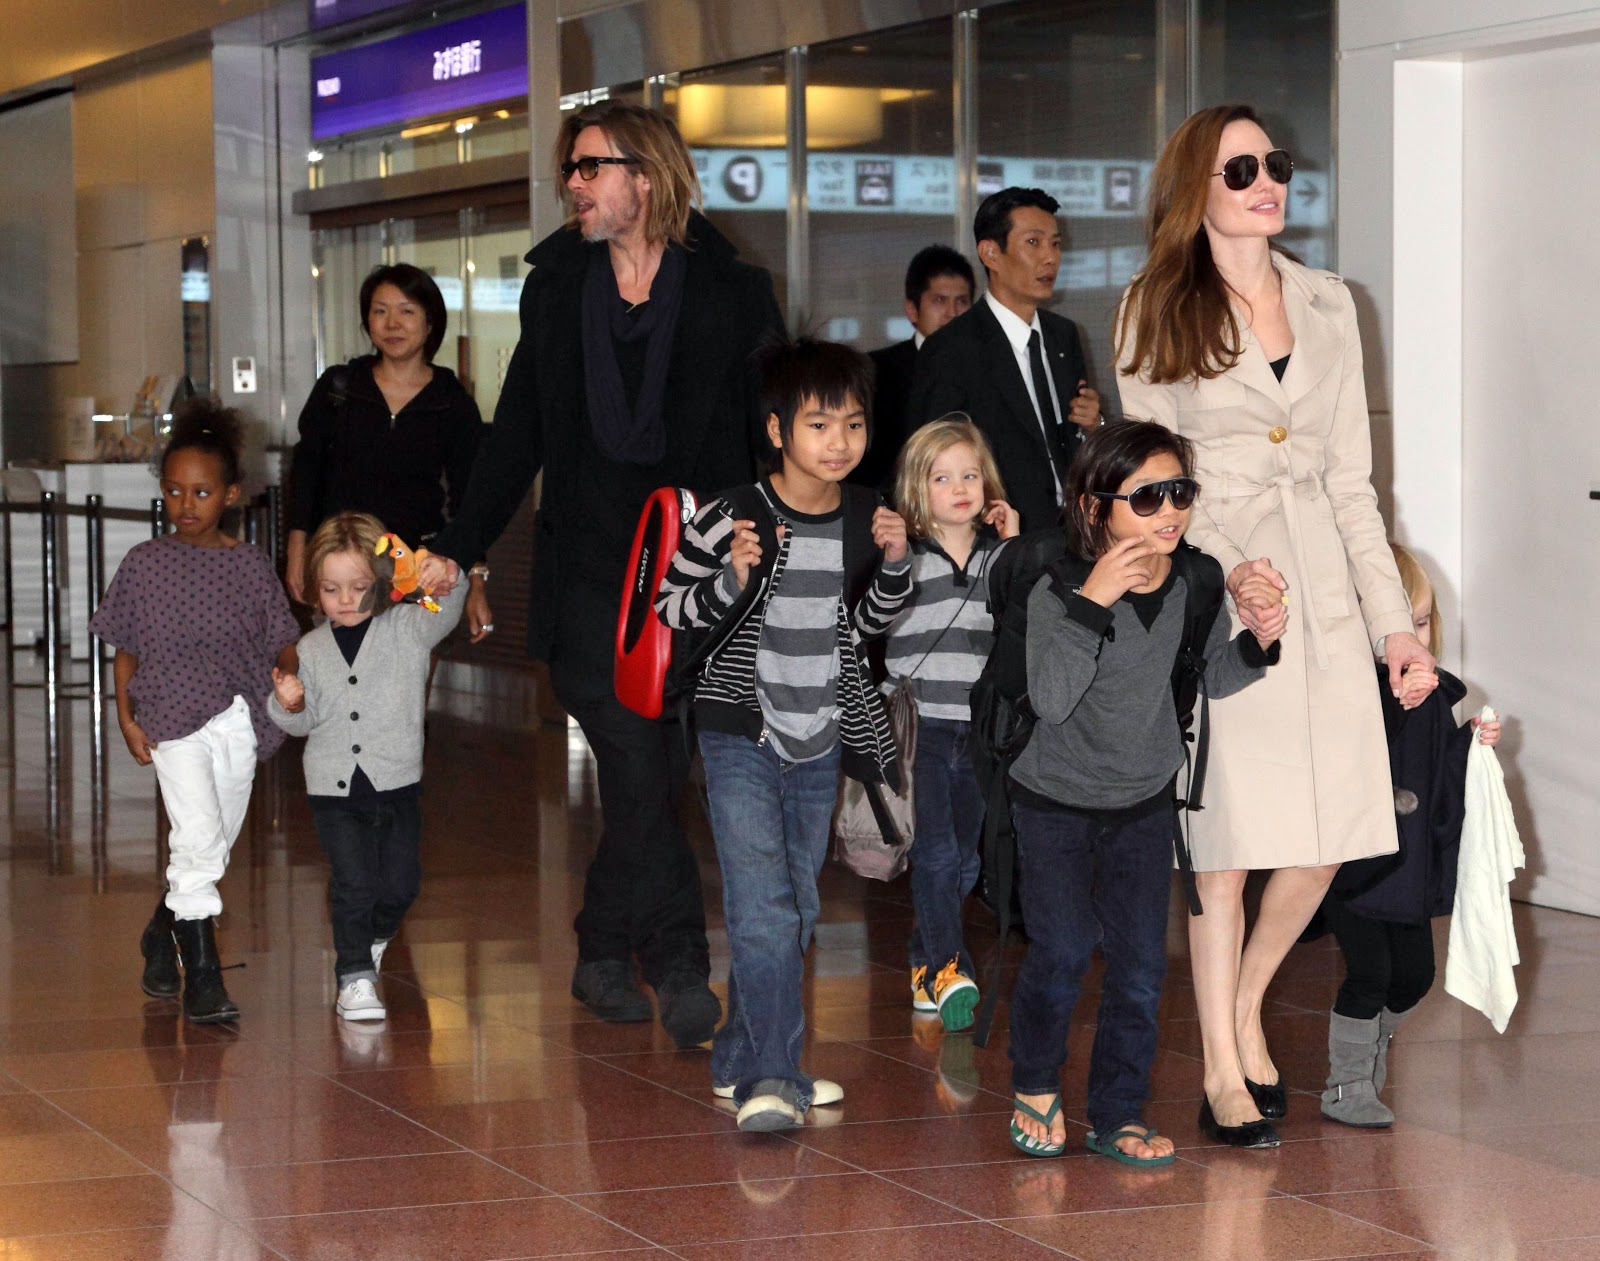 http://2.bp.blogspot.com/-nYD0RWlovds/UQI4wFaRbWI/AAAAAAAAALE/EyZ7FK7hORk/s1600/Brad-Pitt-Angelina-Jolie-and-family.jpg